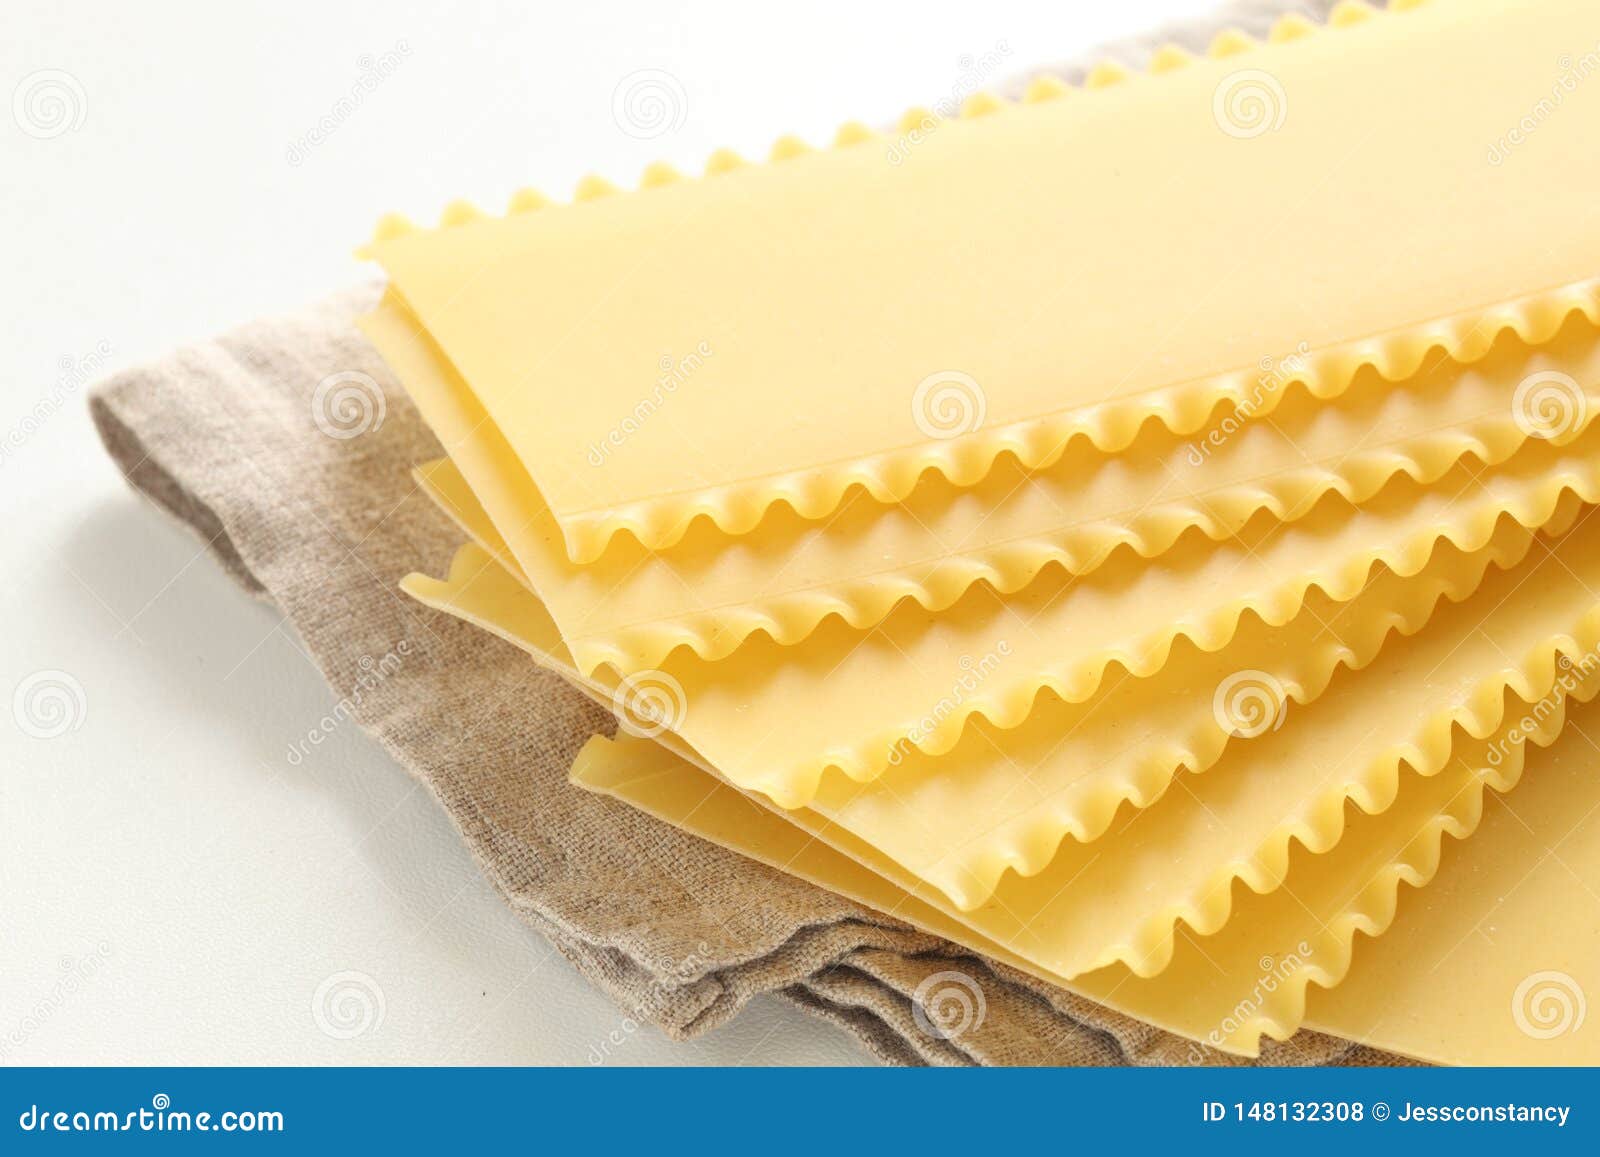 Italian Food Ingredient, Dried Lasagna Flat Pasta Stock Photo - Image of  lasagna, ingredient: 148132308